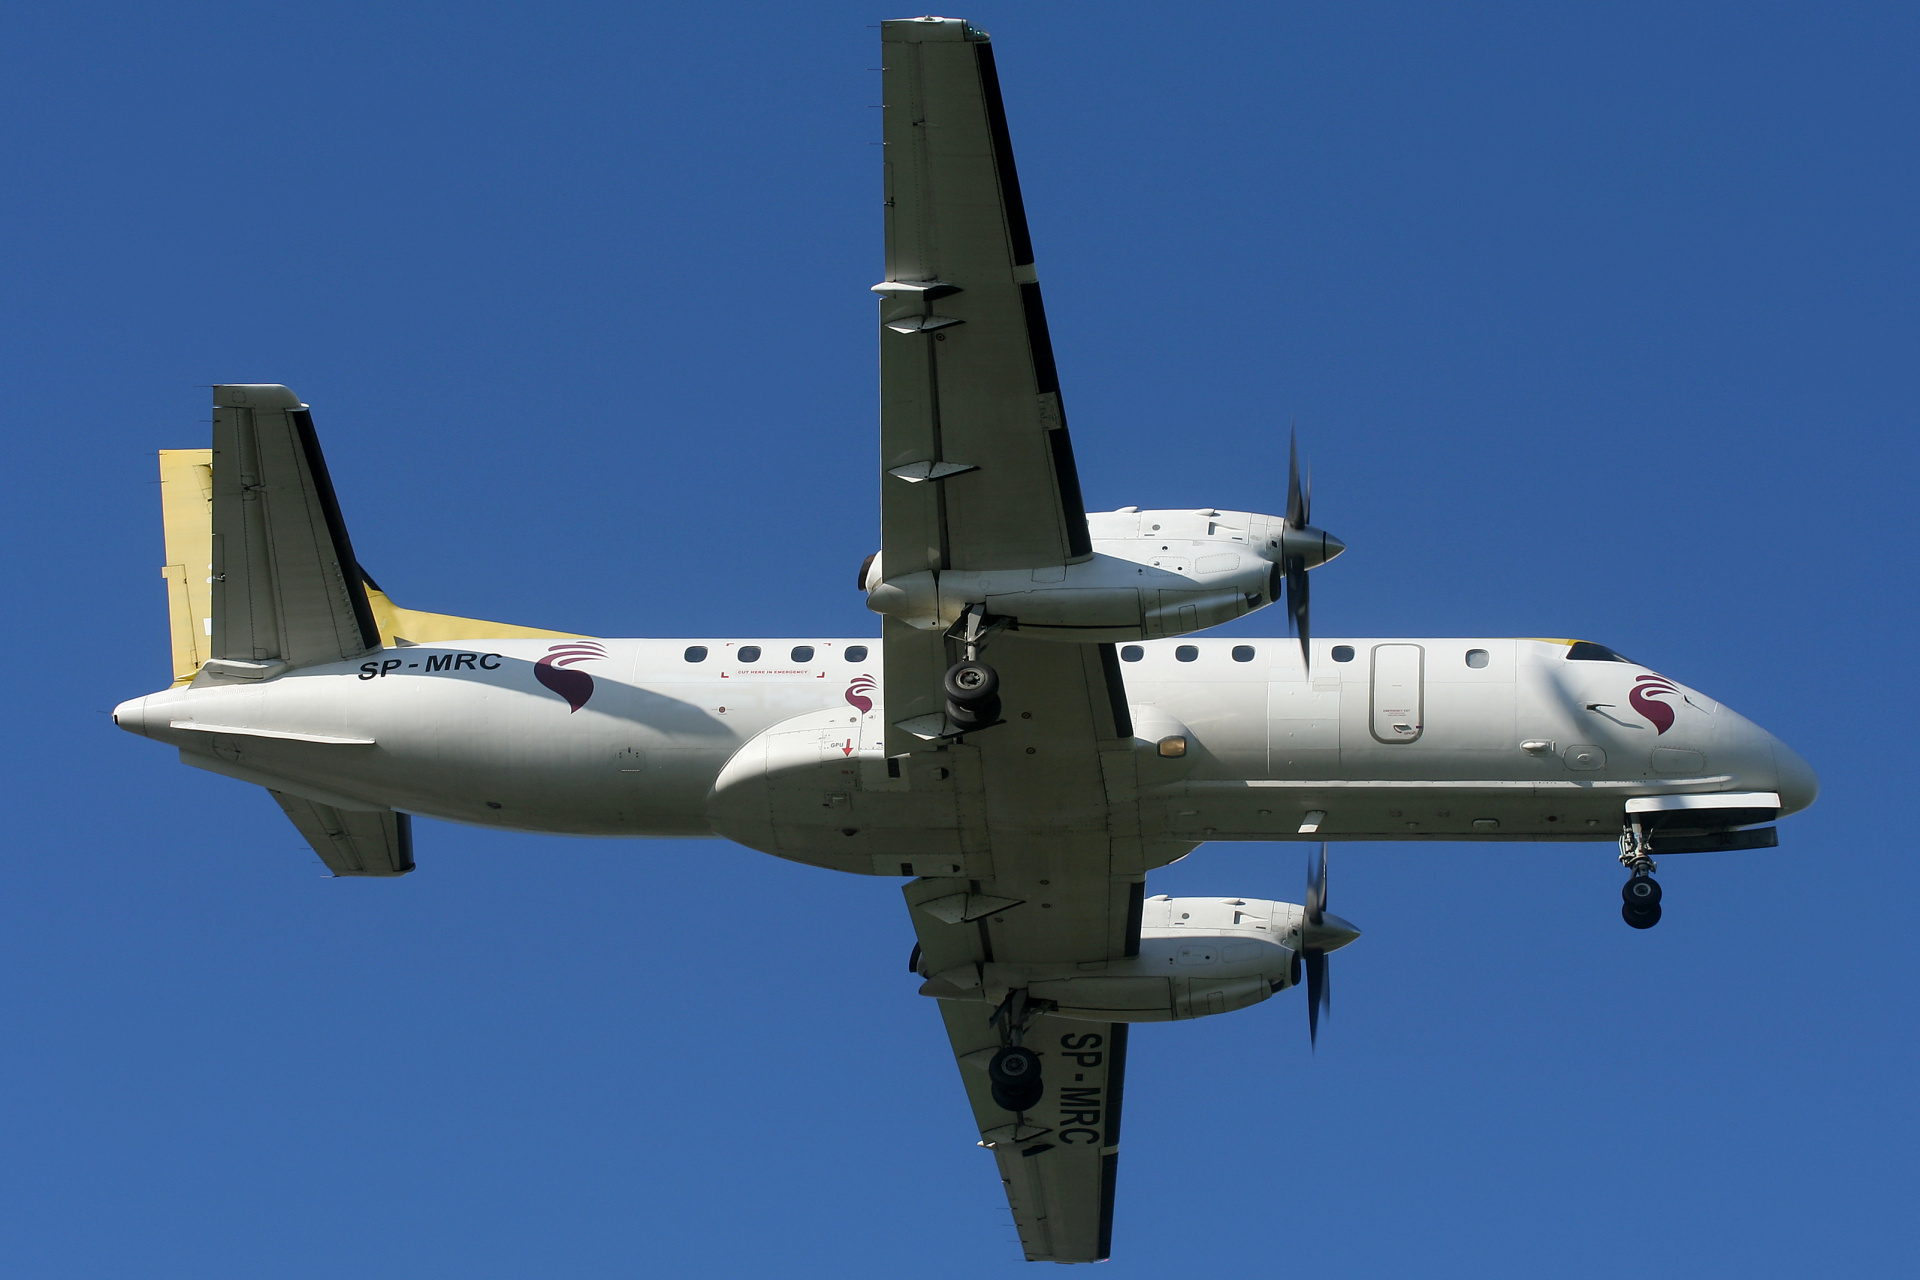 SP-MRC, SkyTaxi (Samoloty » Spotting na EPWA » Saab 340 » 340A)